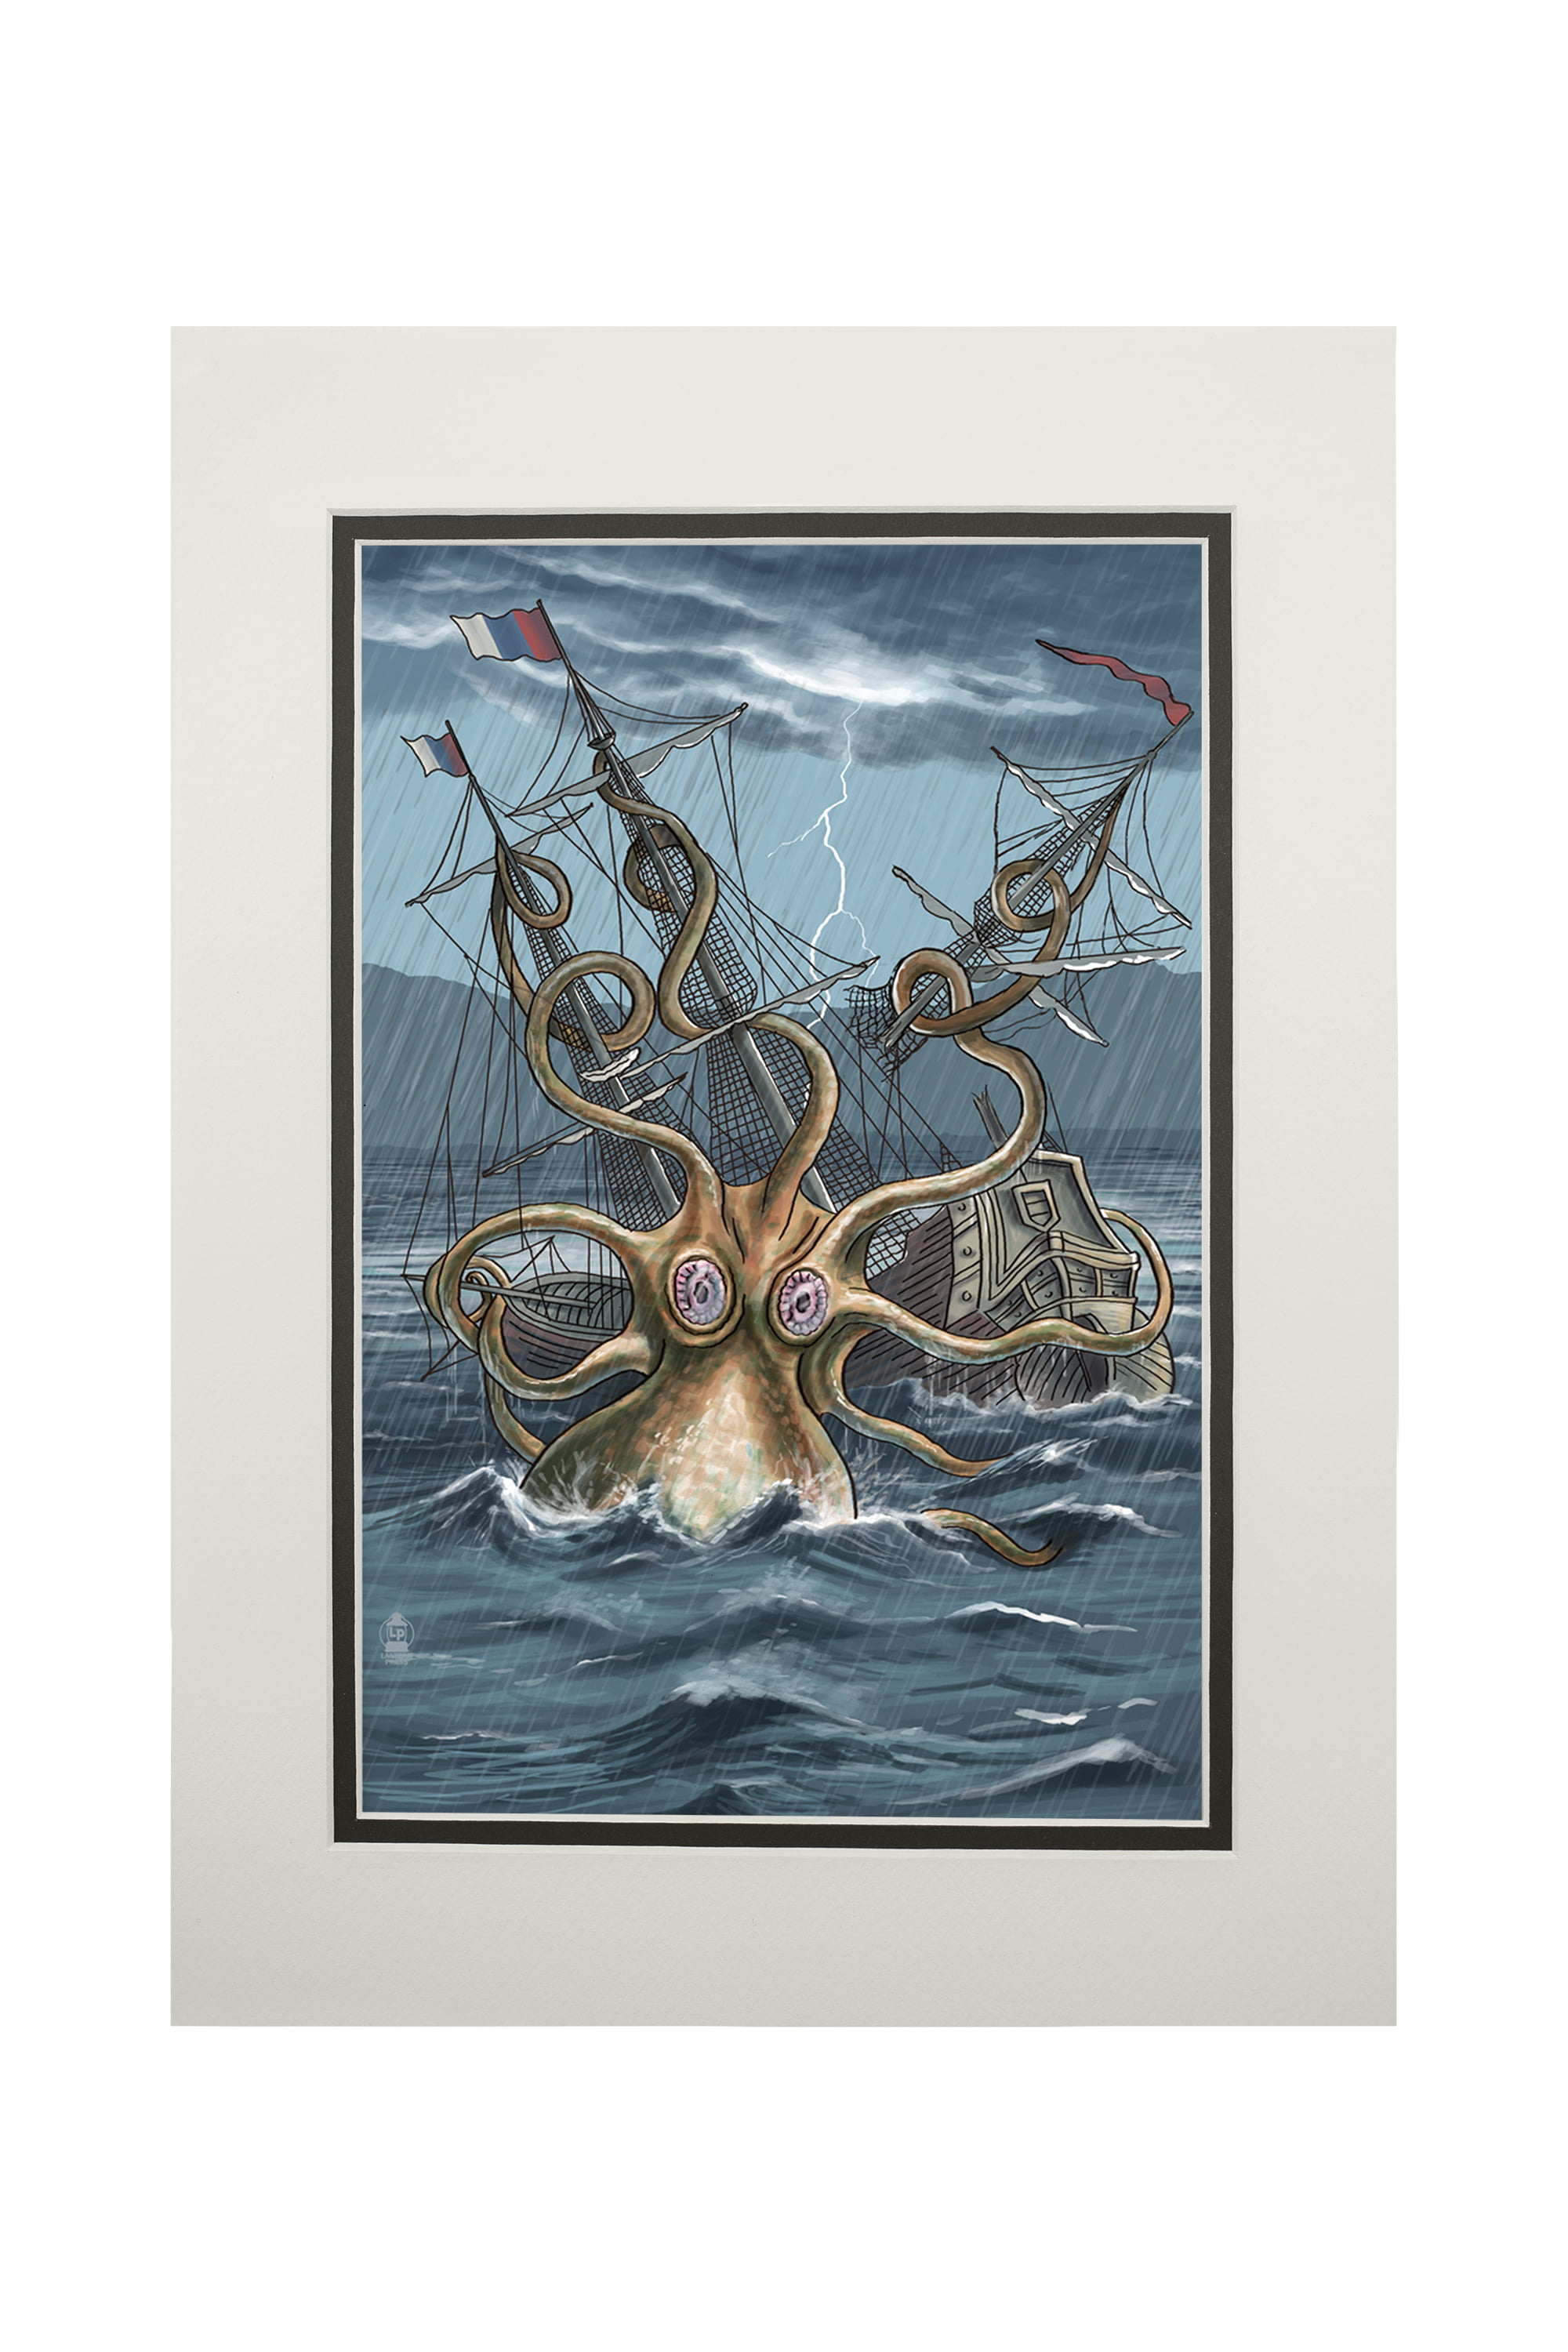 Kraken, Anchor and Compass - Kraken - Posters and Art Prints